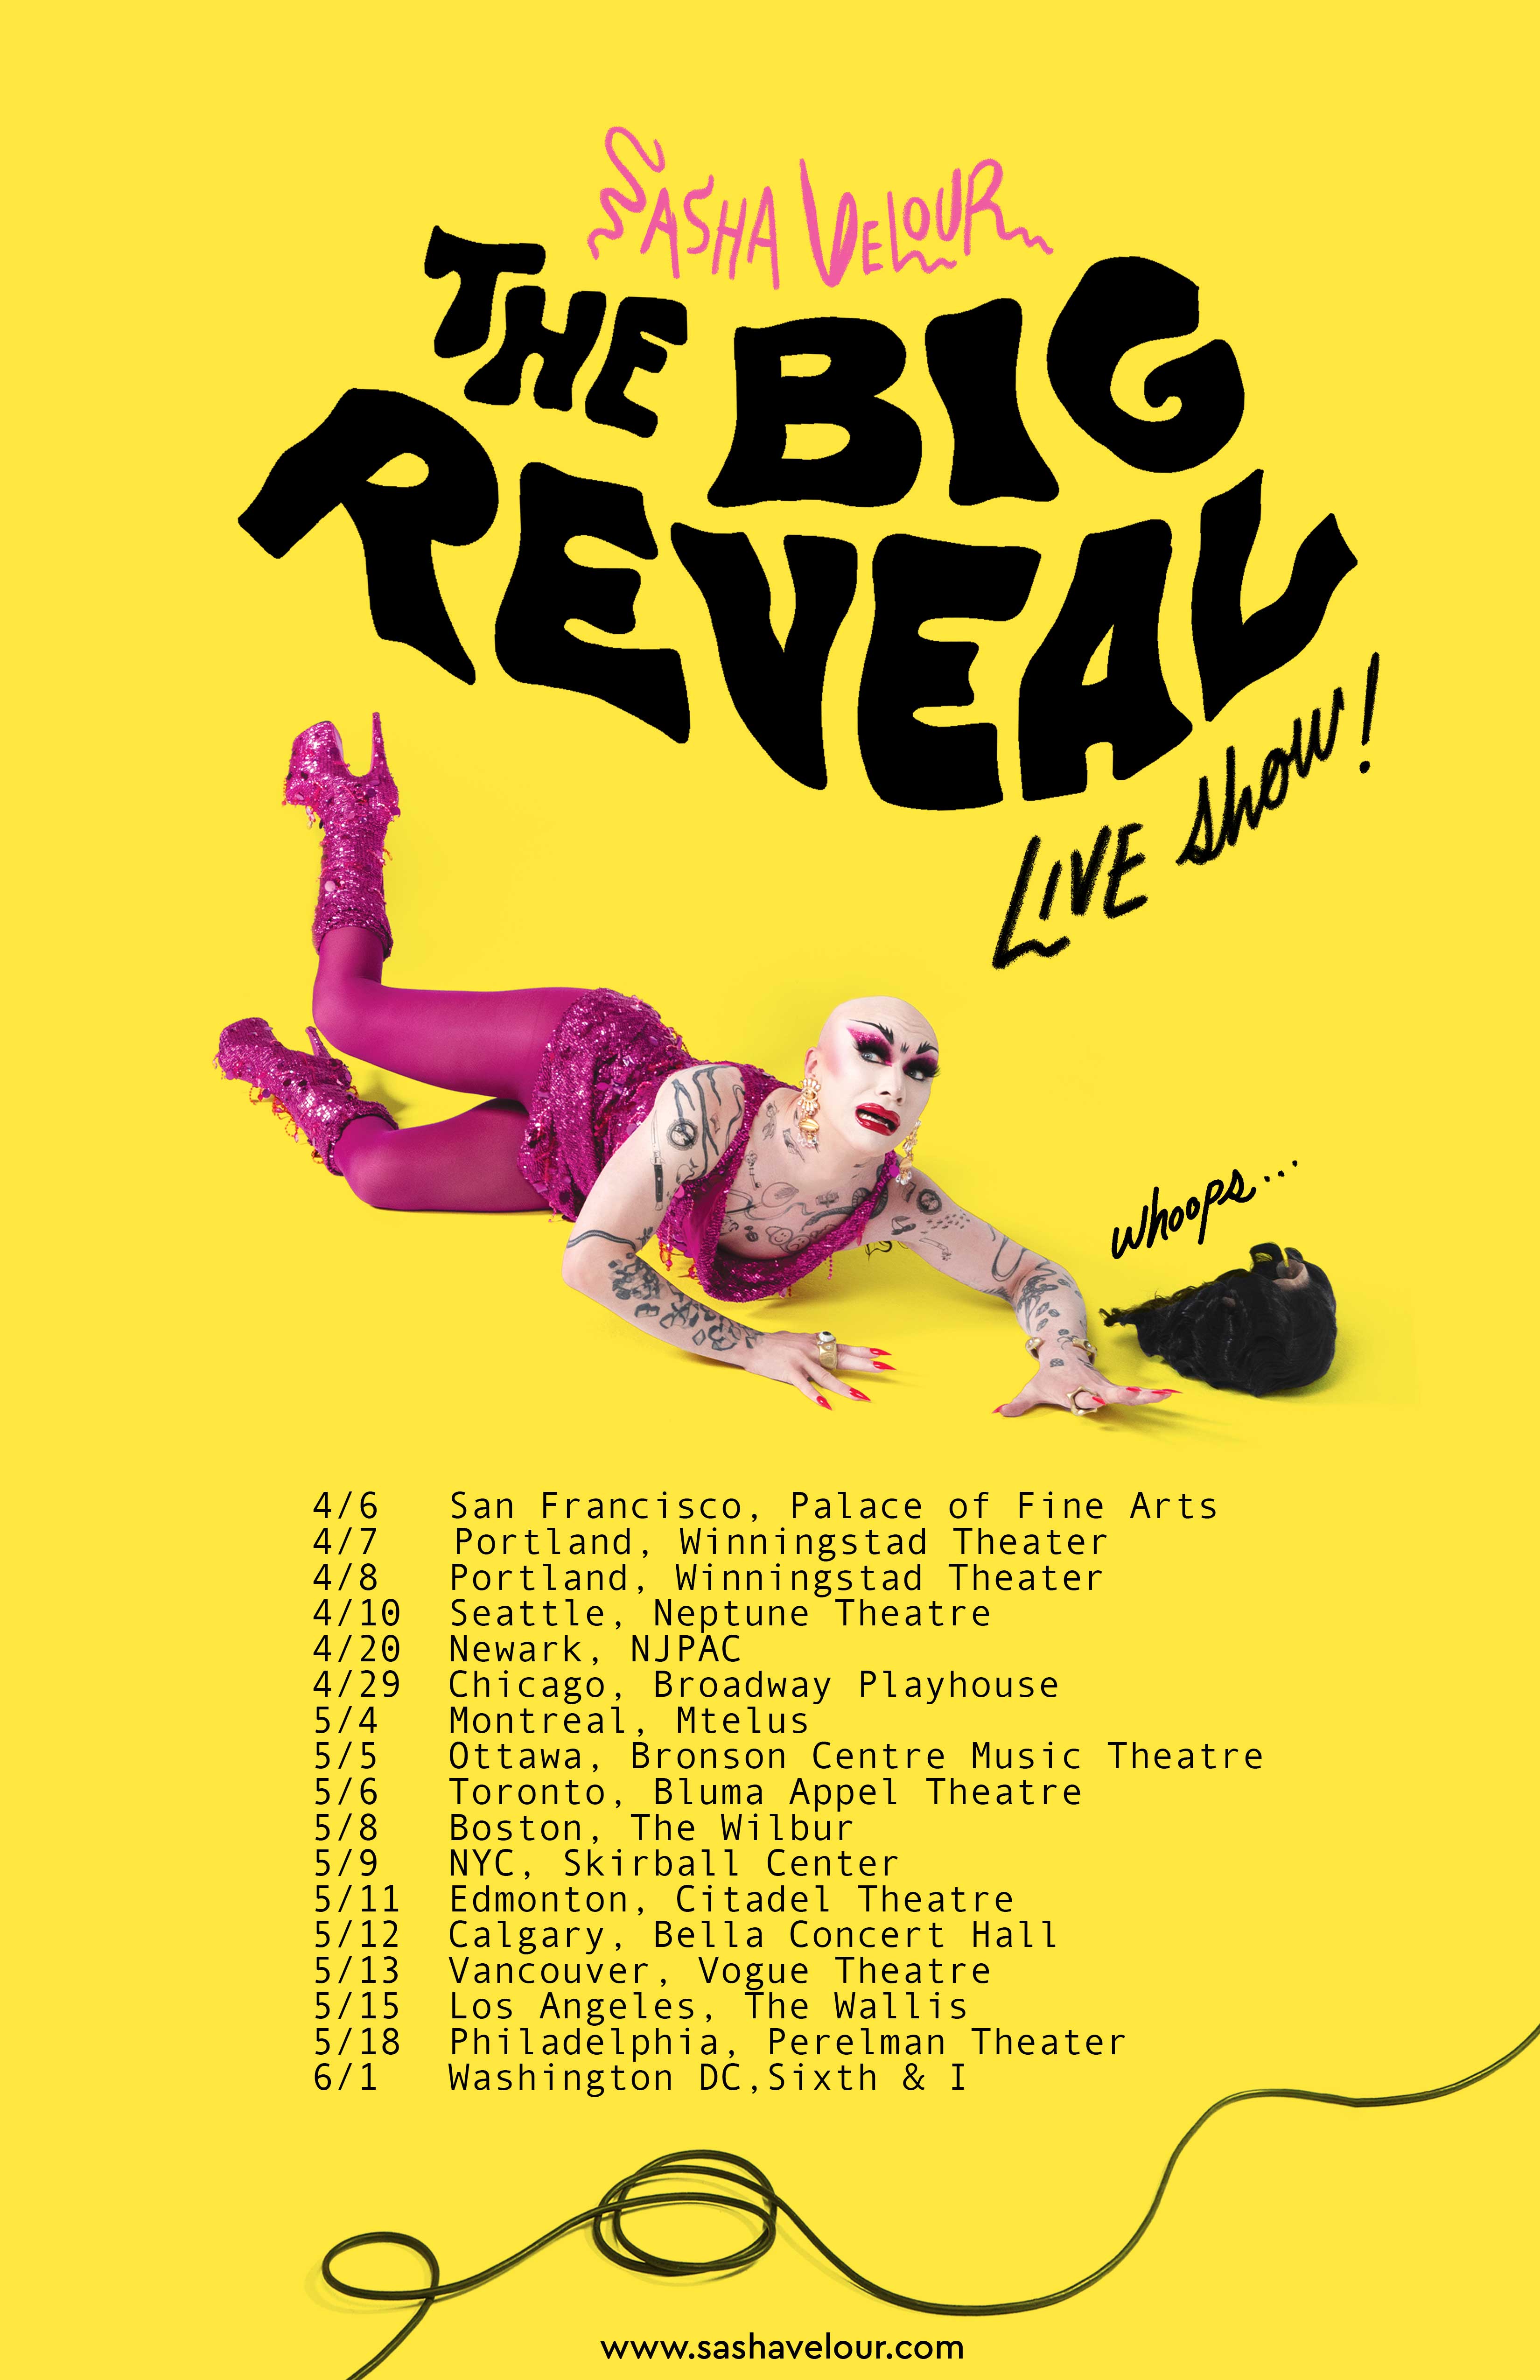 Sasha Velour - The Big Reveal Live Show & Book Tour - All Dates